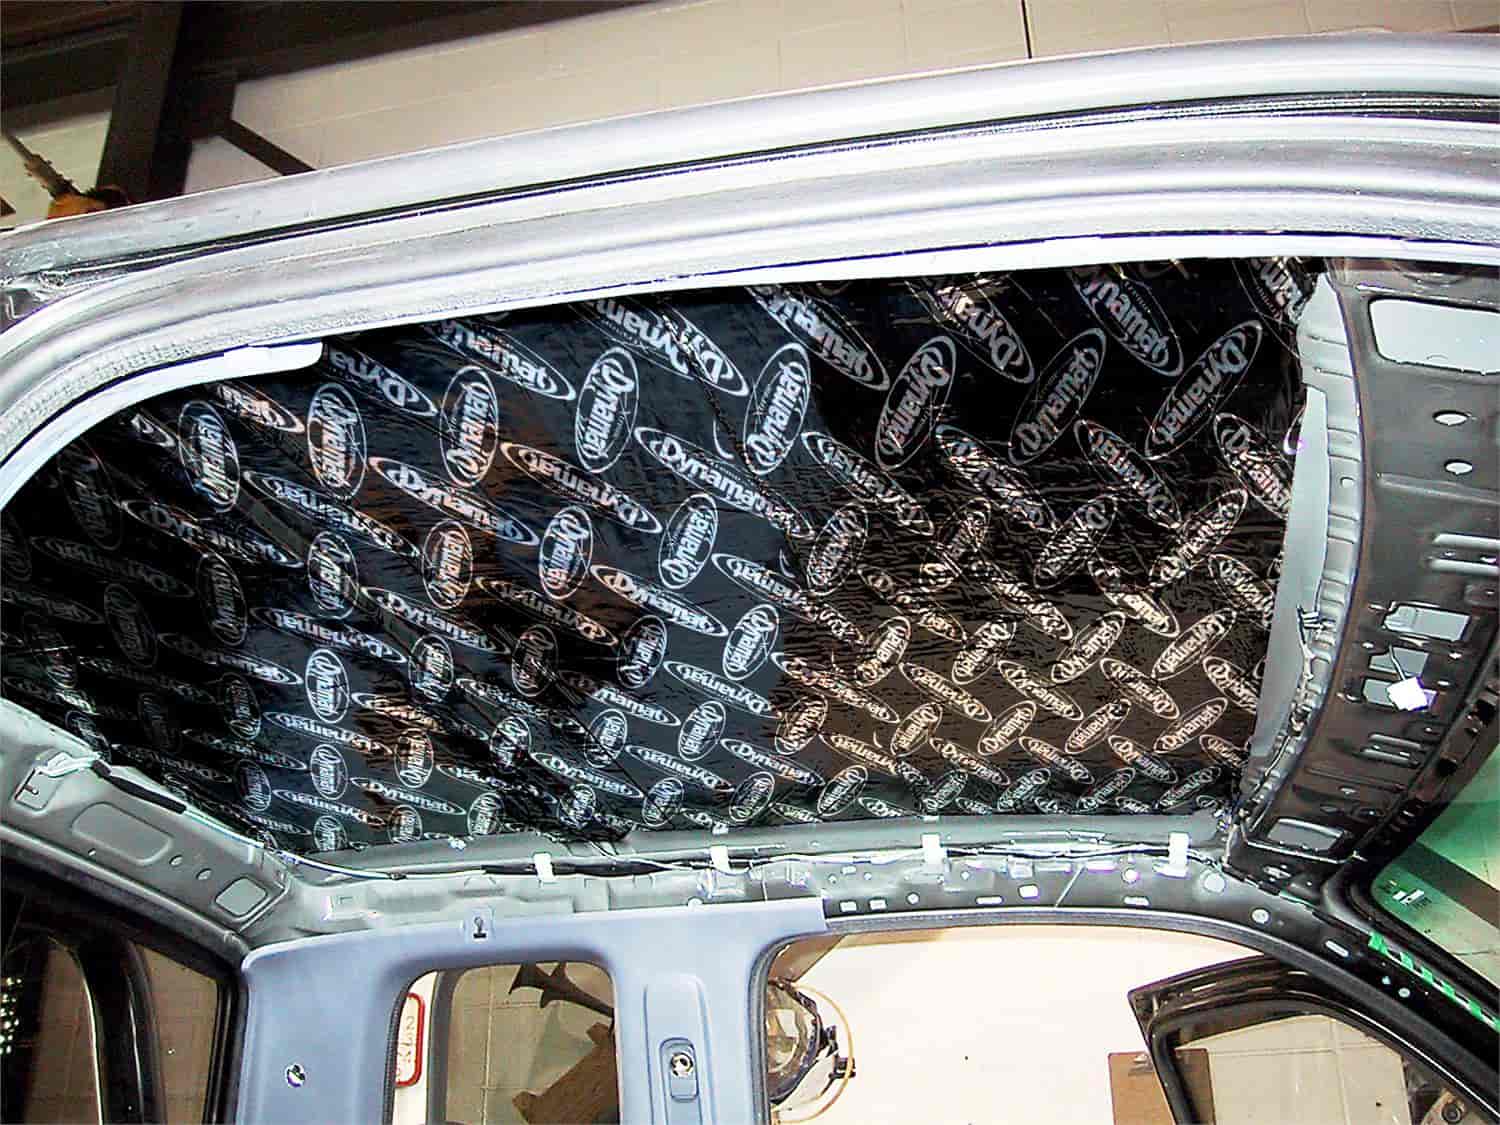 Xtreme Insulation Panels Nine 18" x 32" (457mm x 812mm) Panels